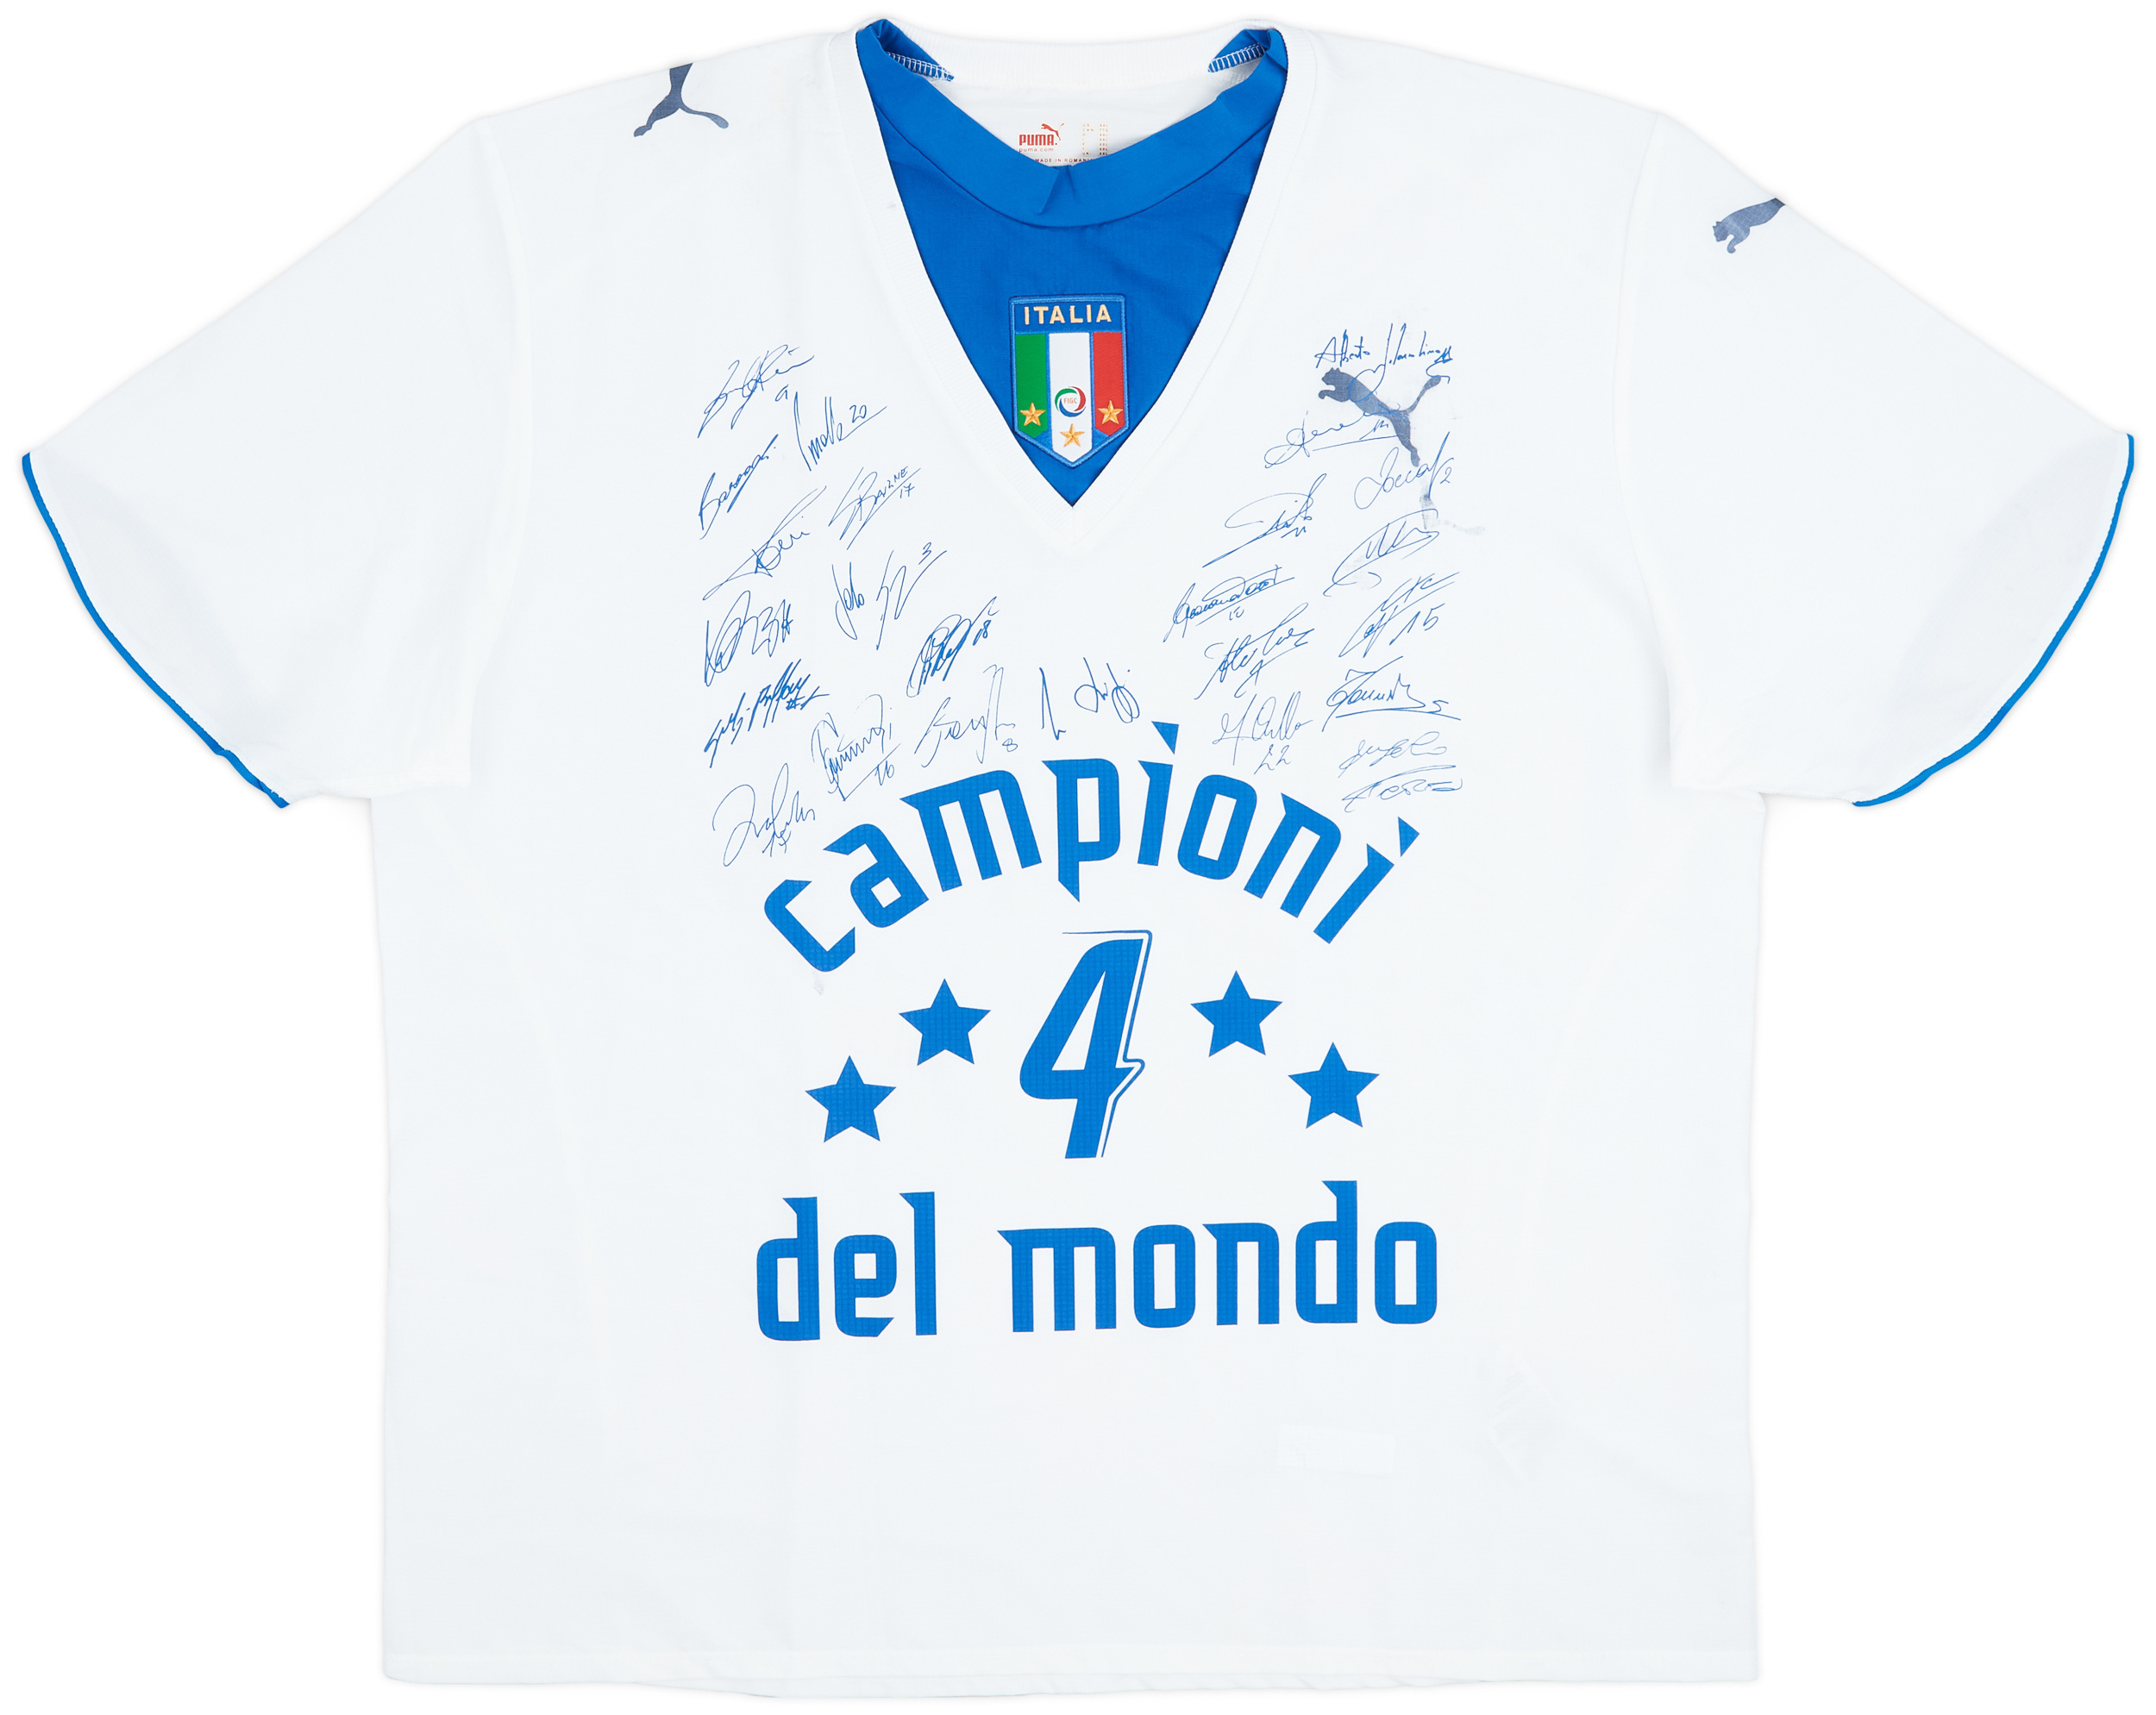 2006 Italy 'Campioni del Mondo' 'Signed' Away Shirt - 6/10 - ()